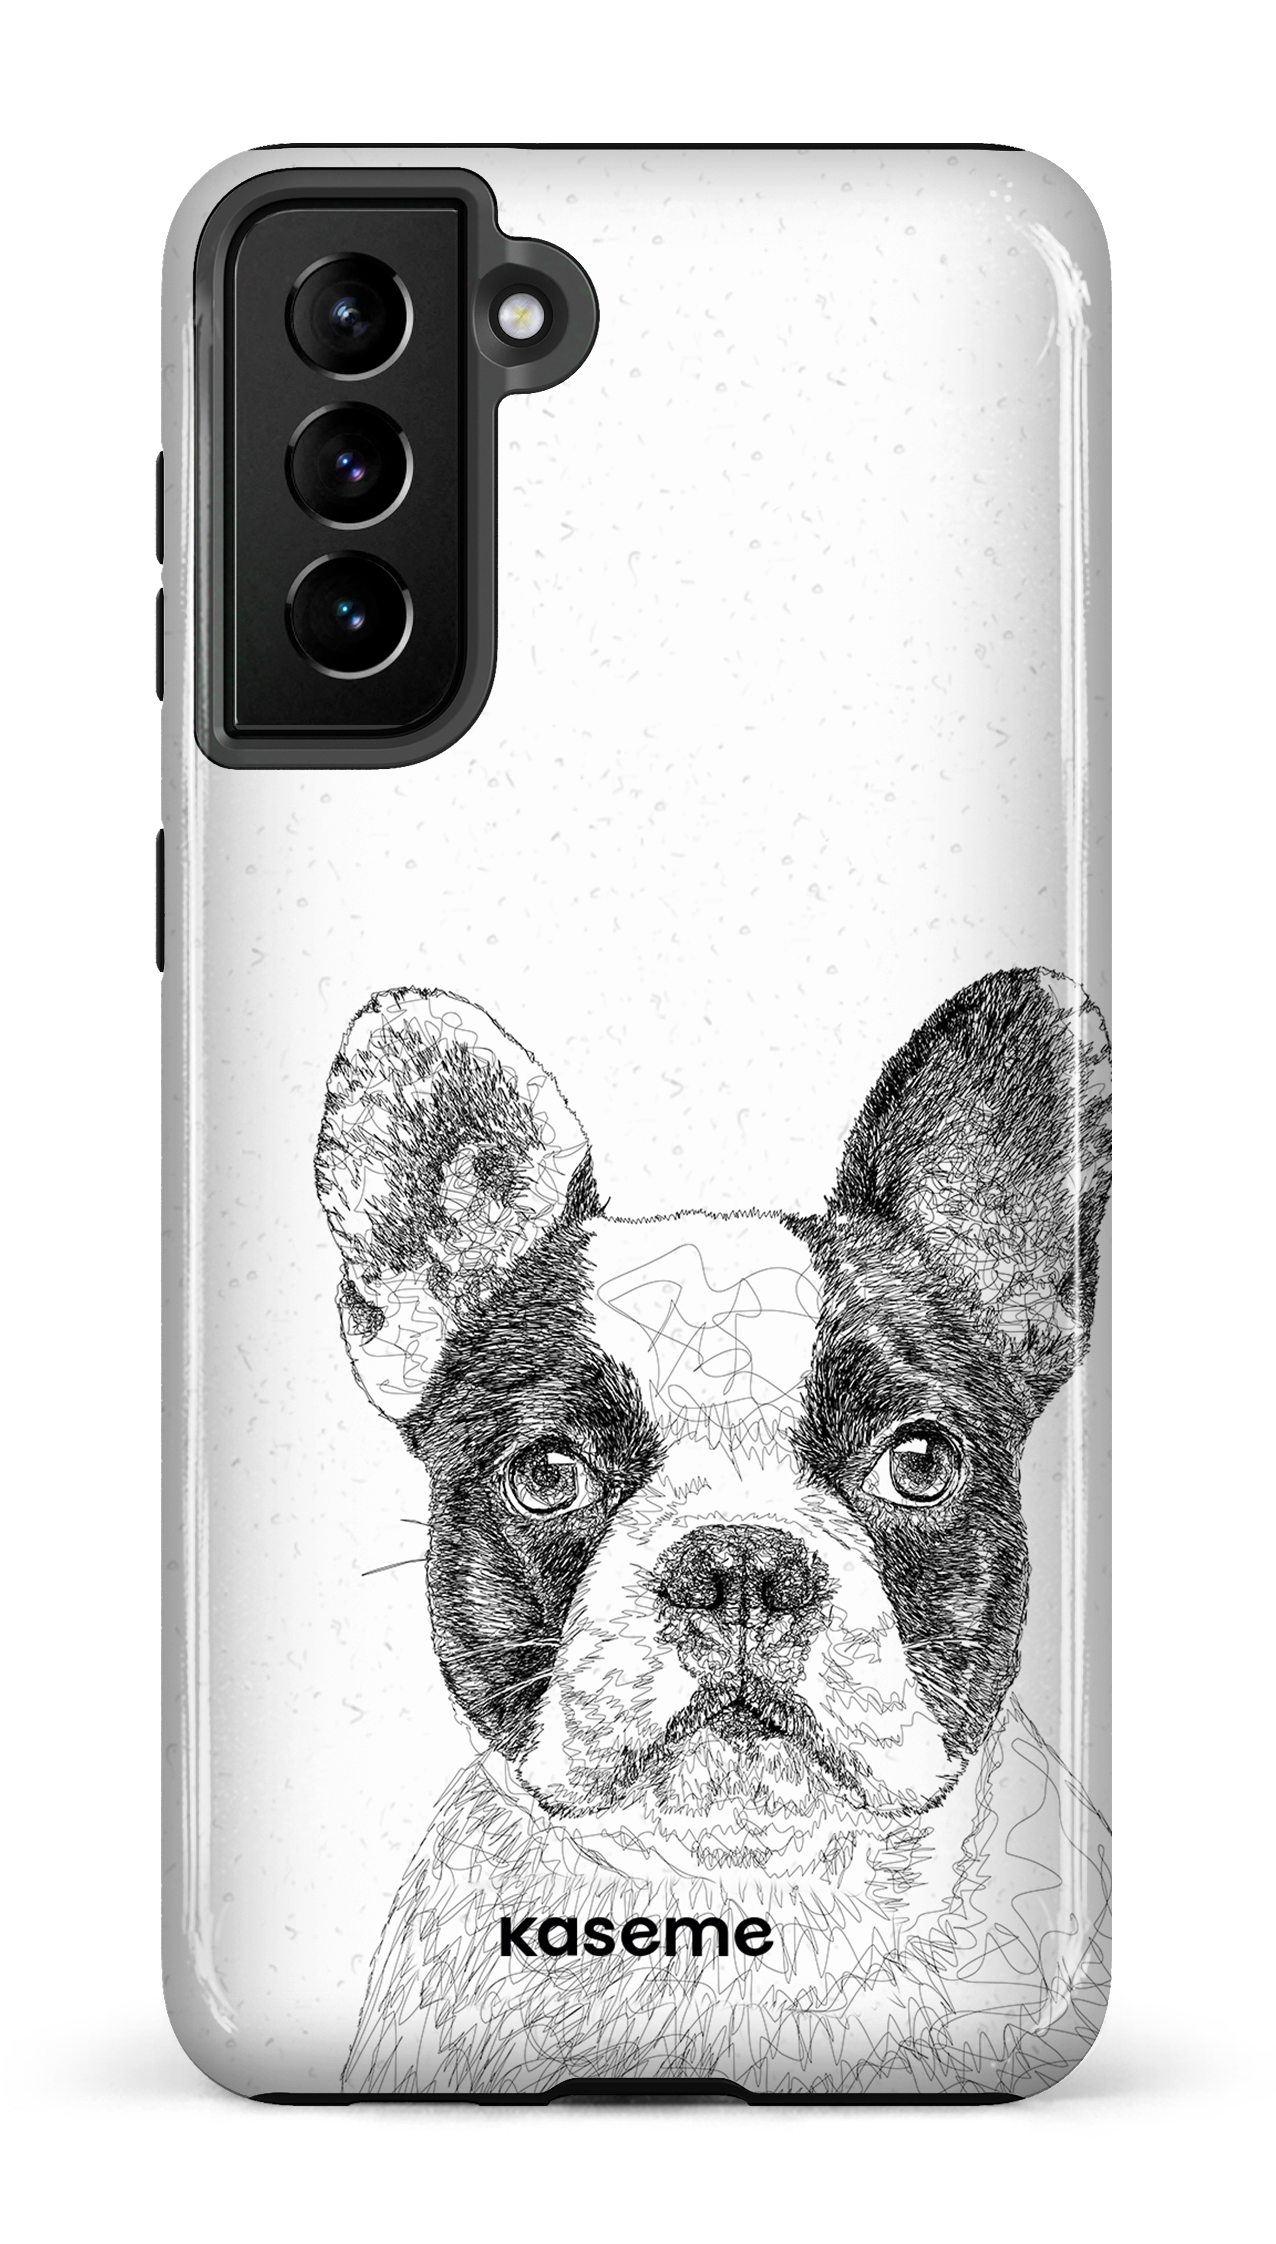 French Bulldog - Galaxy S21 Plus